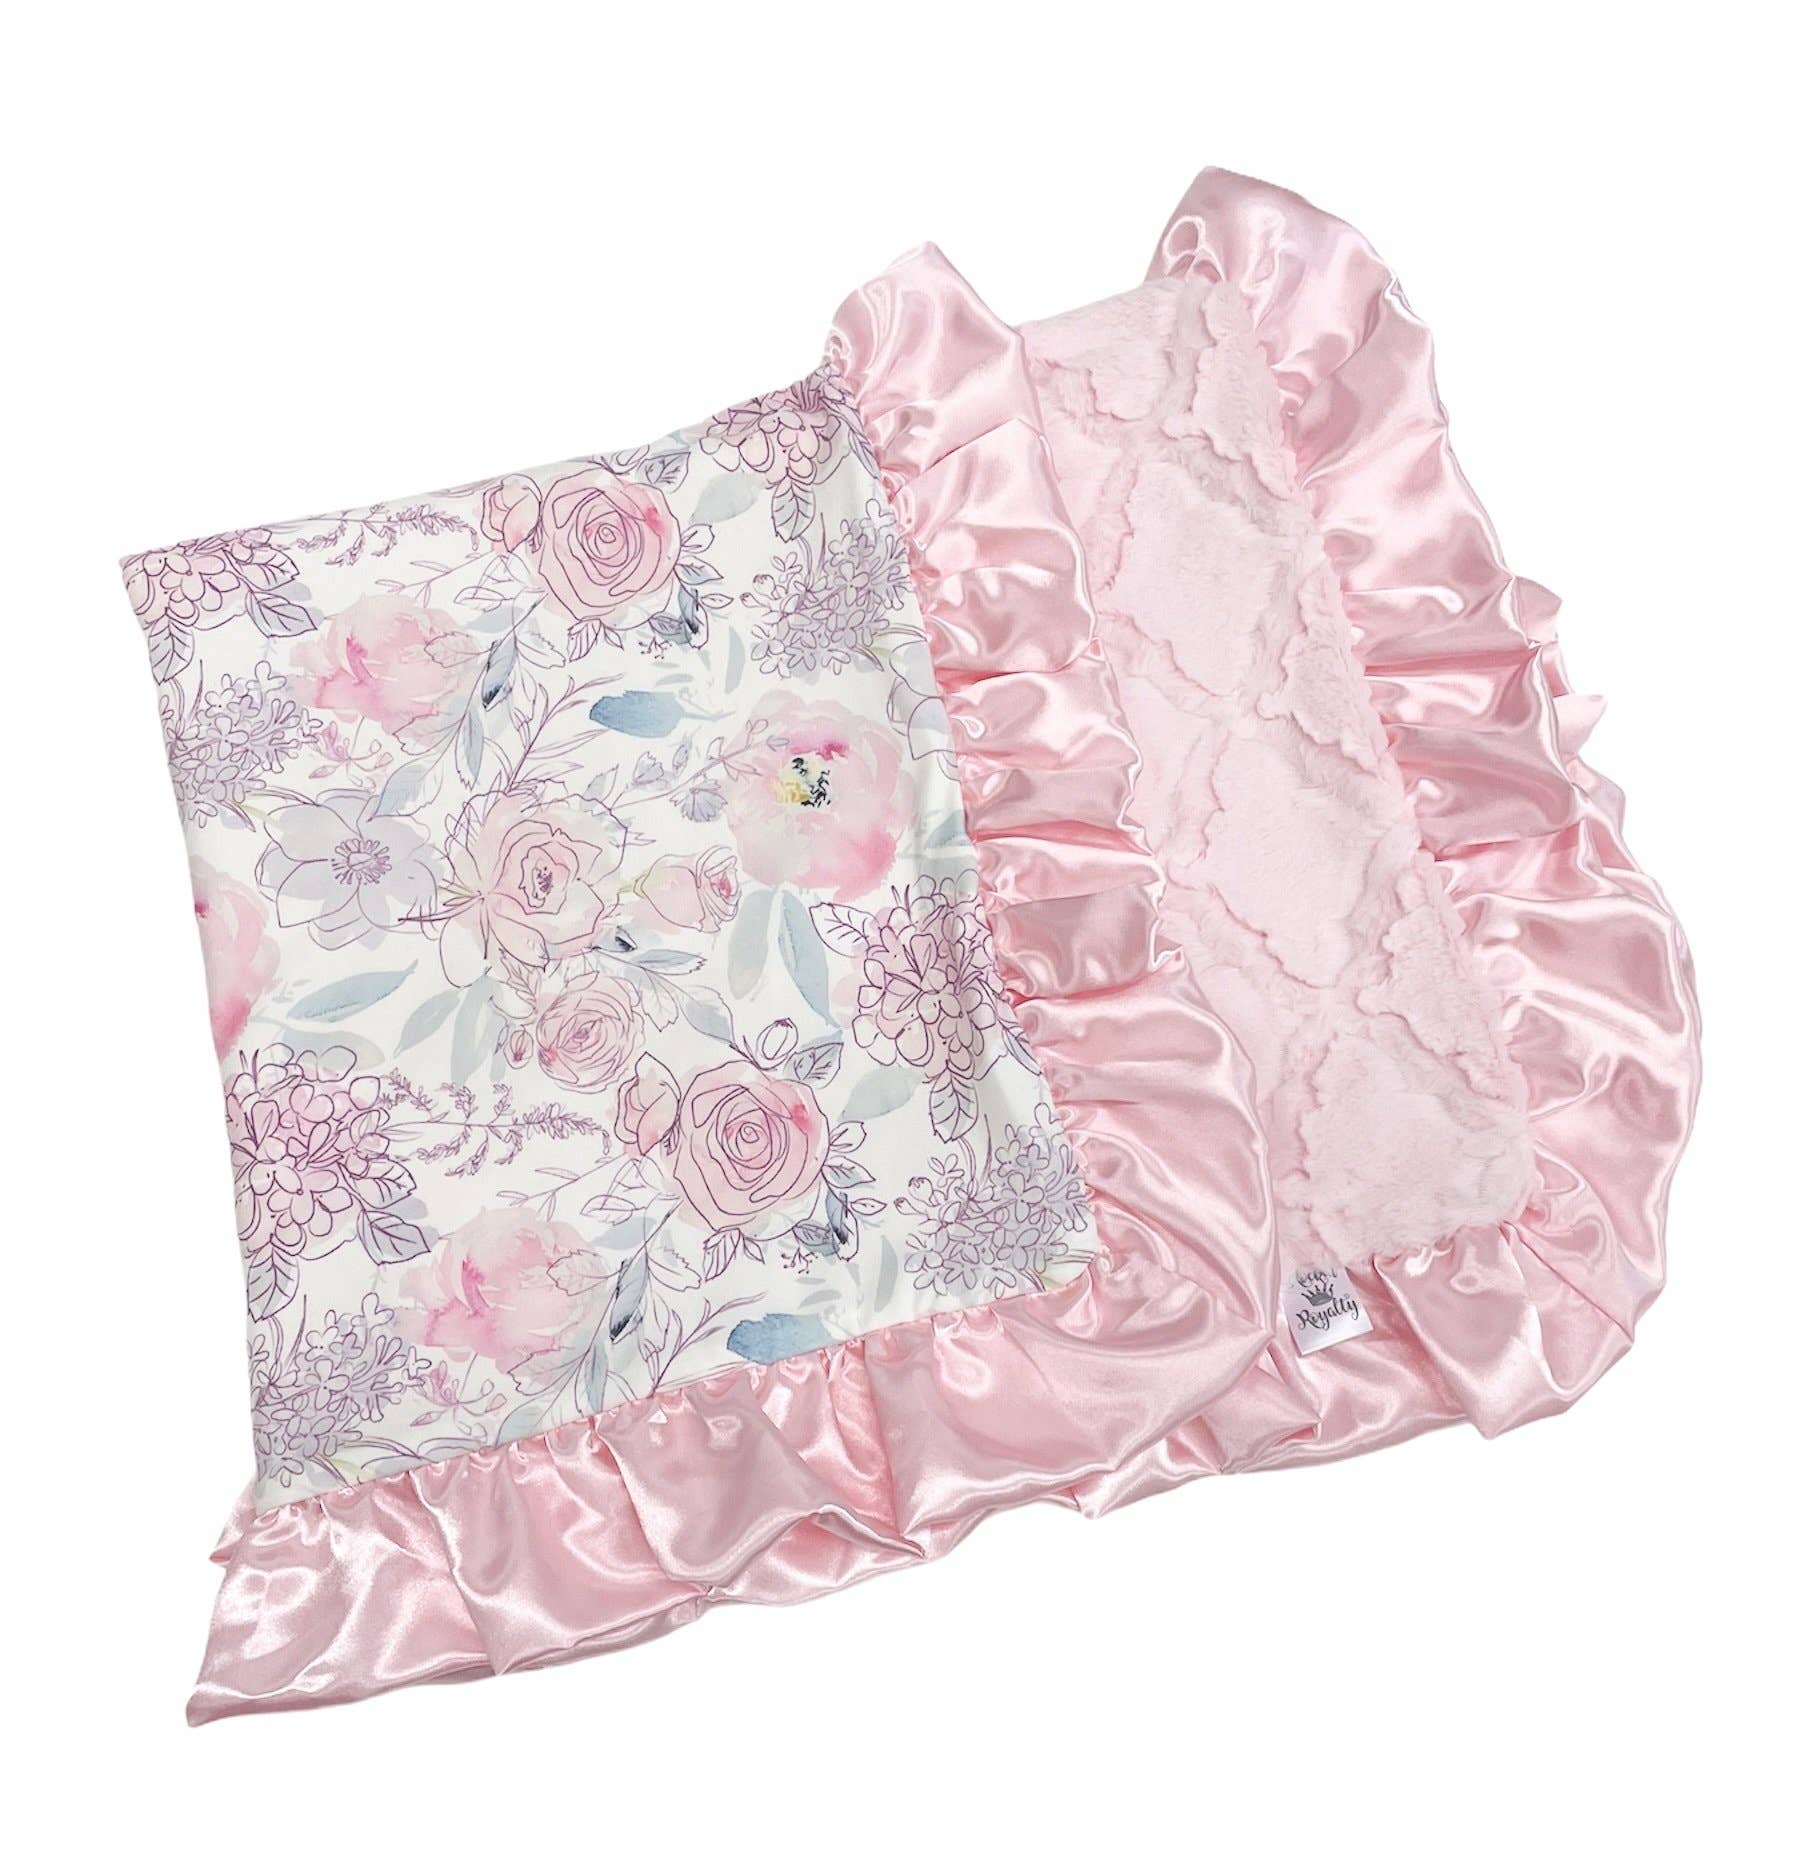 Bashful Pink Floral Luxe cuddle Blanket